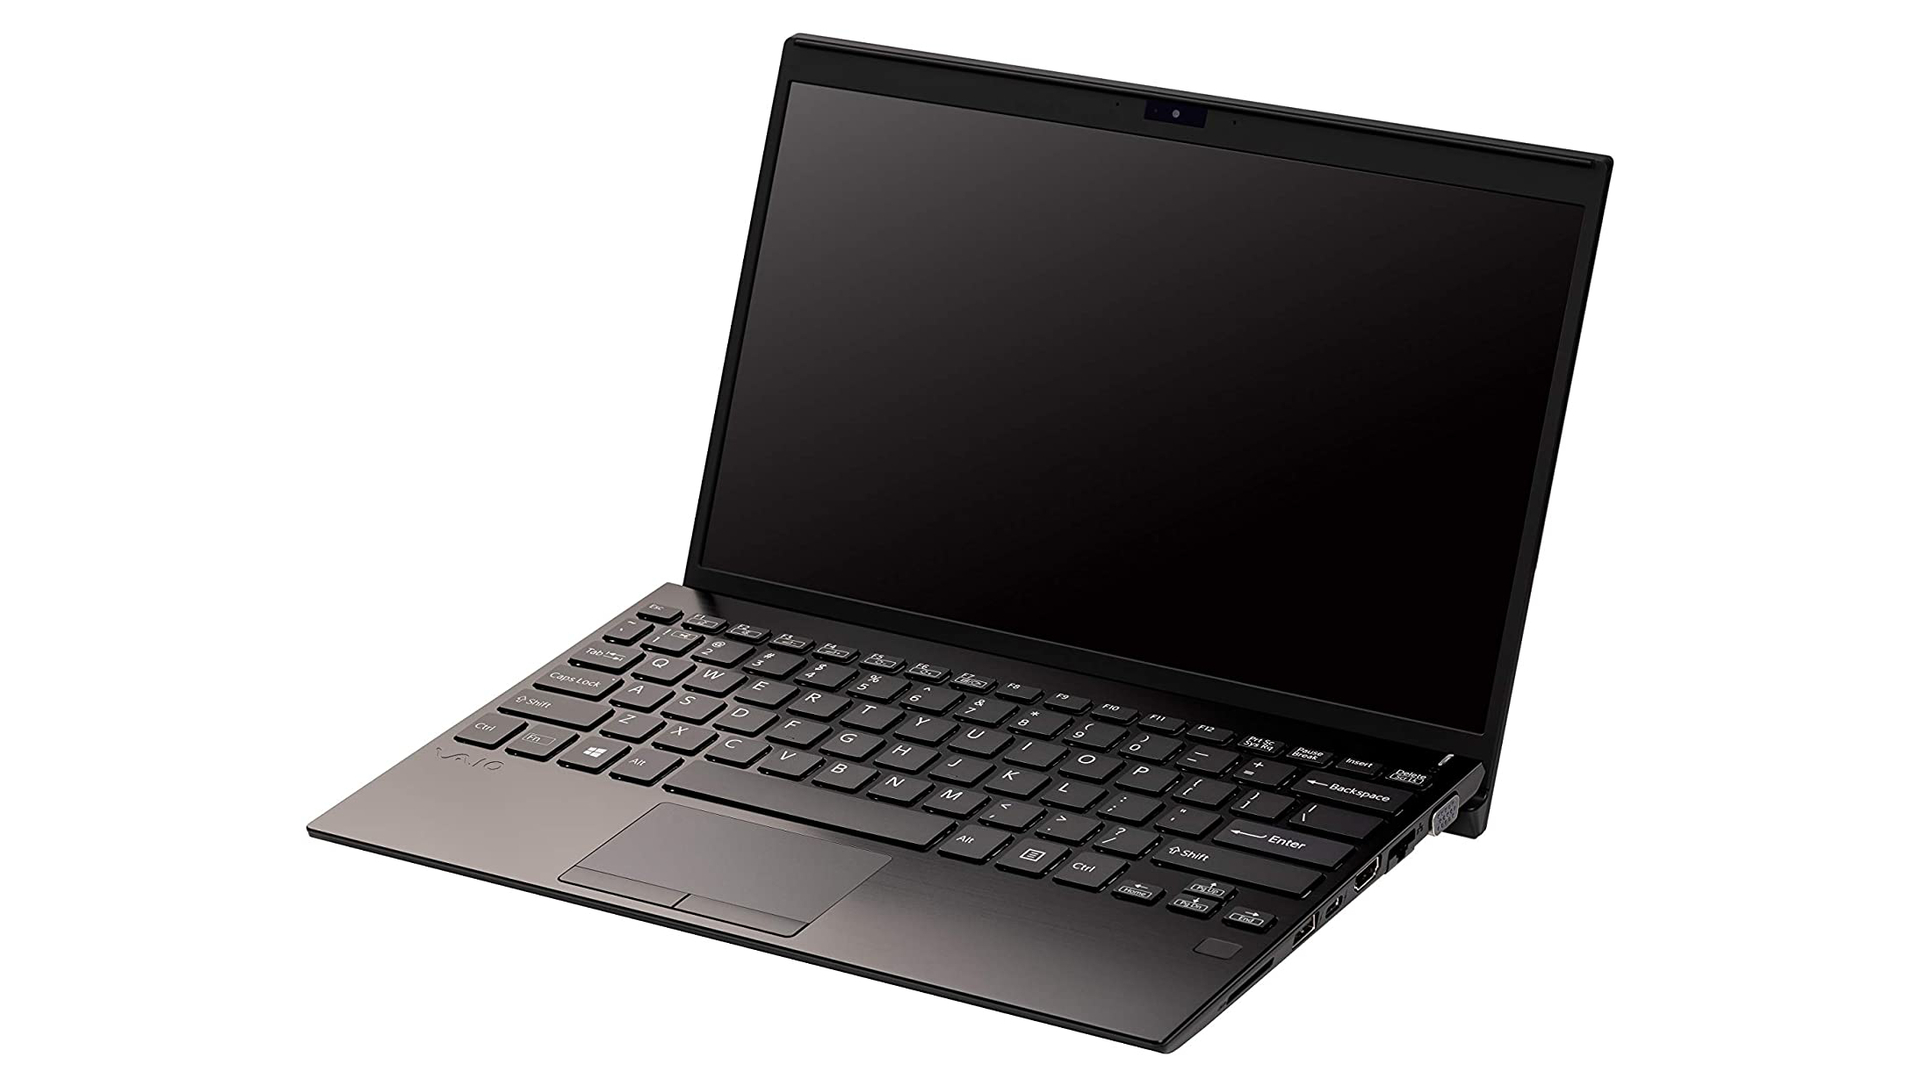 Vaio SX 12 small laptop - The best mini laptops